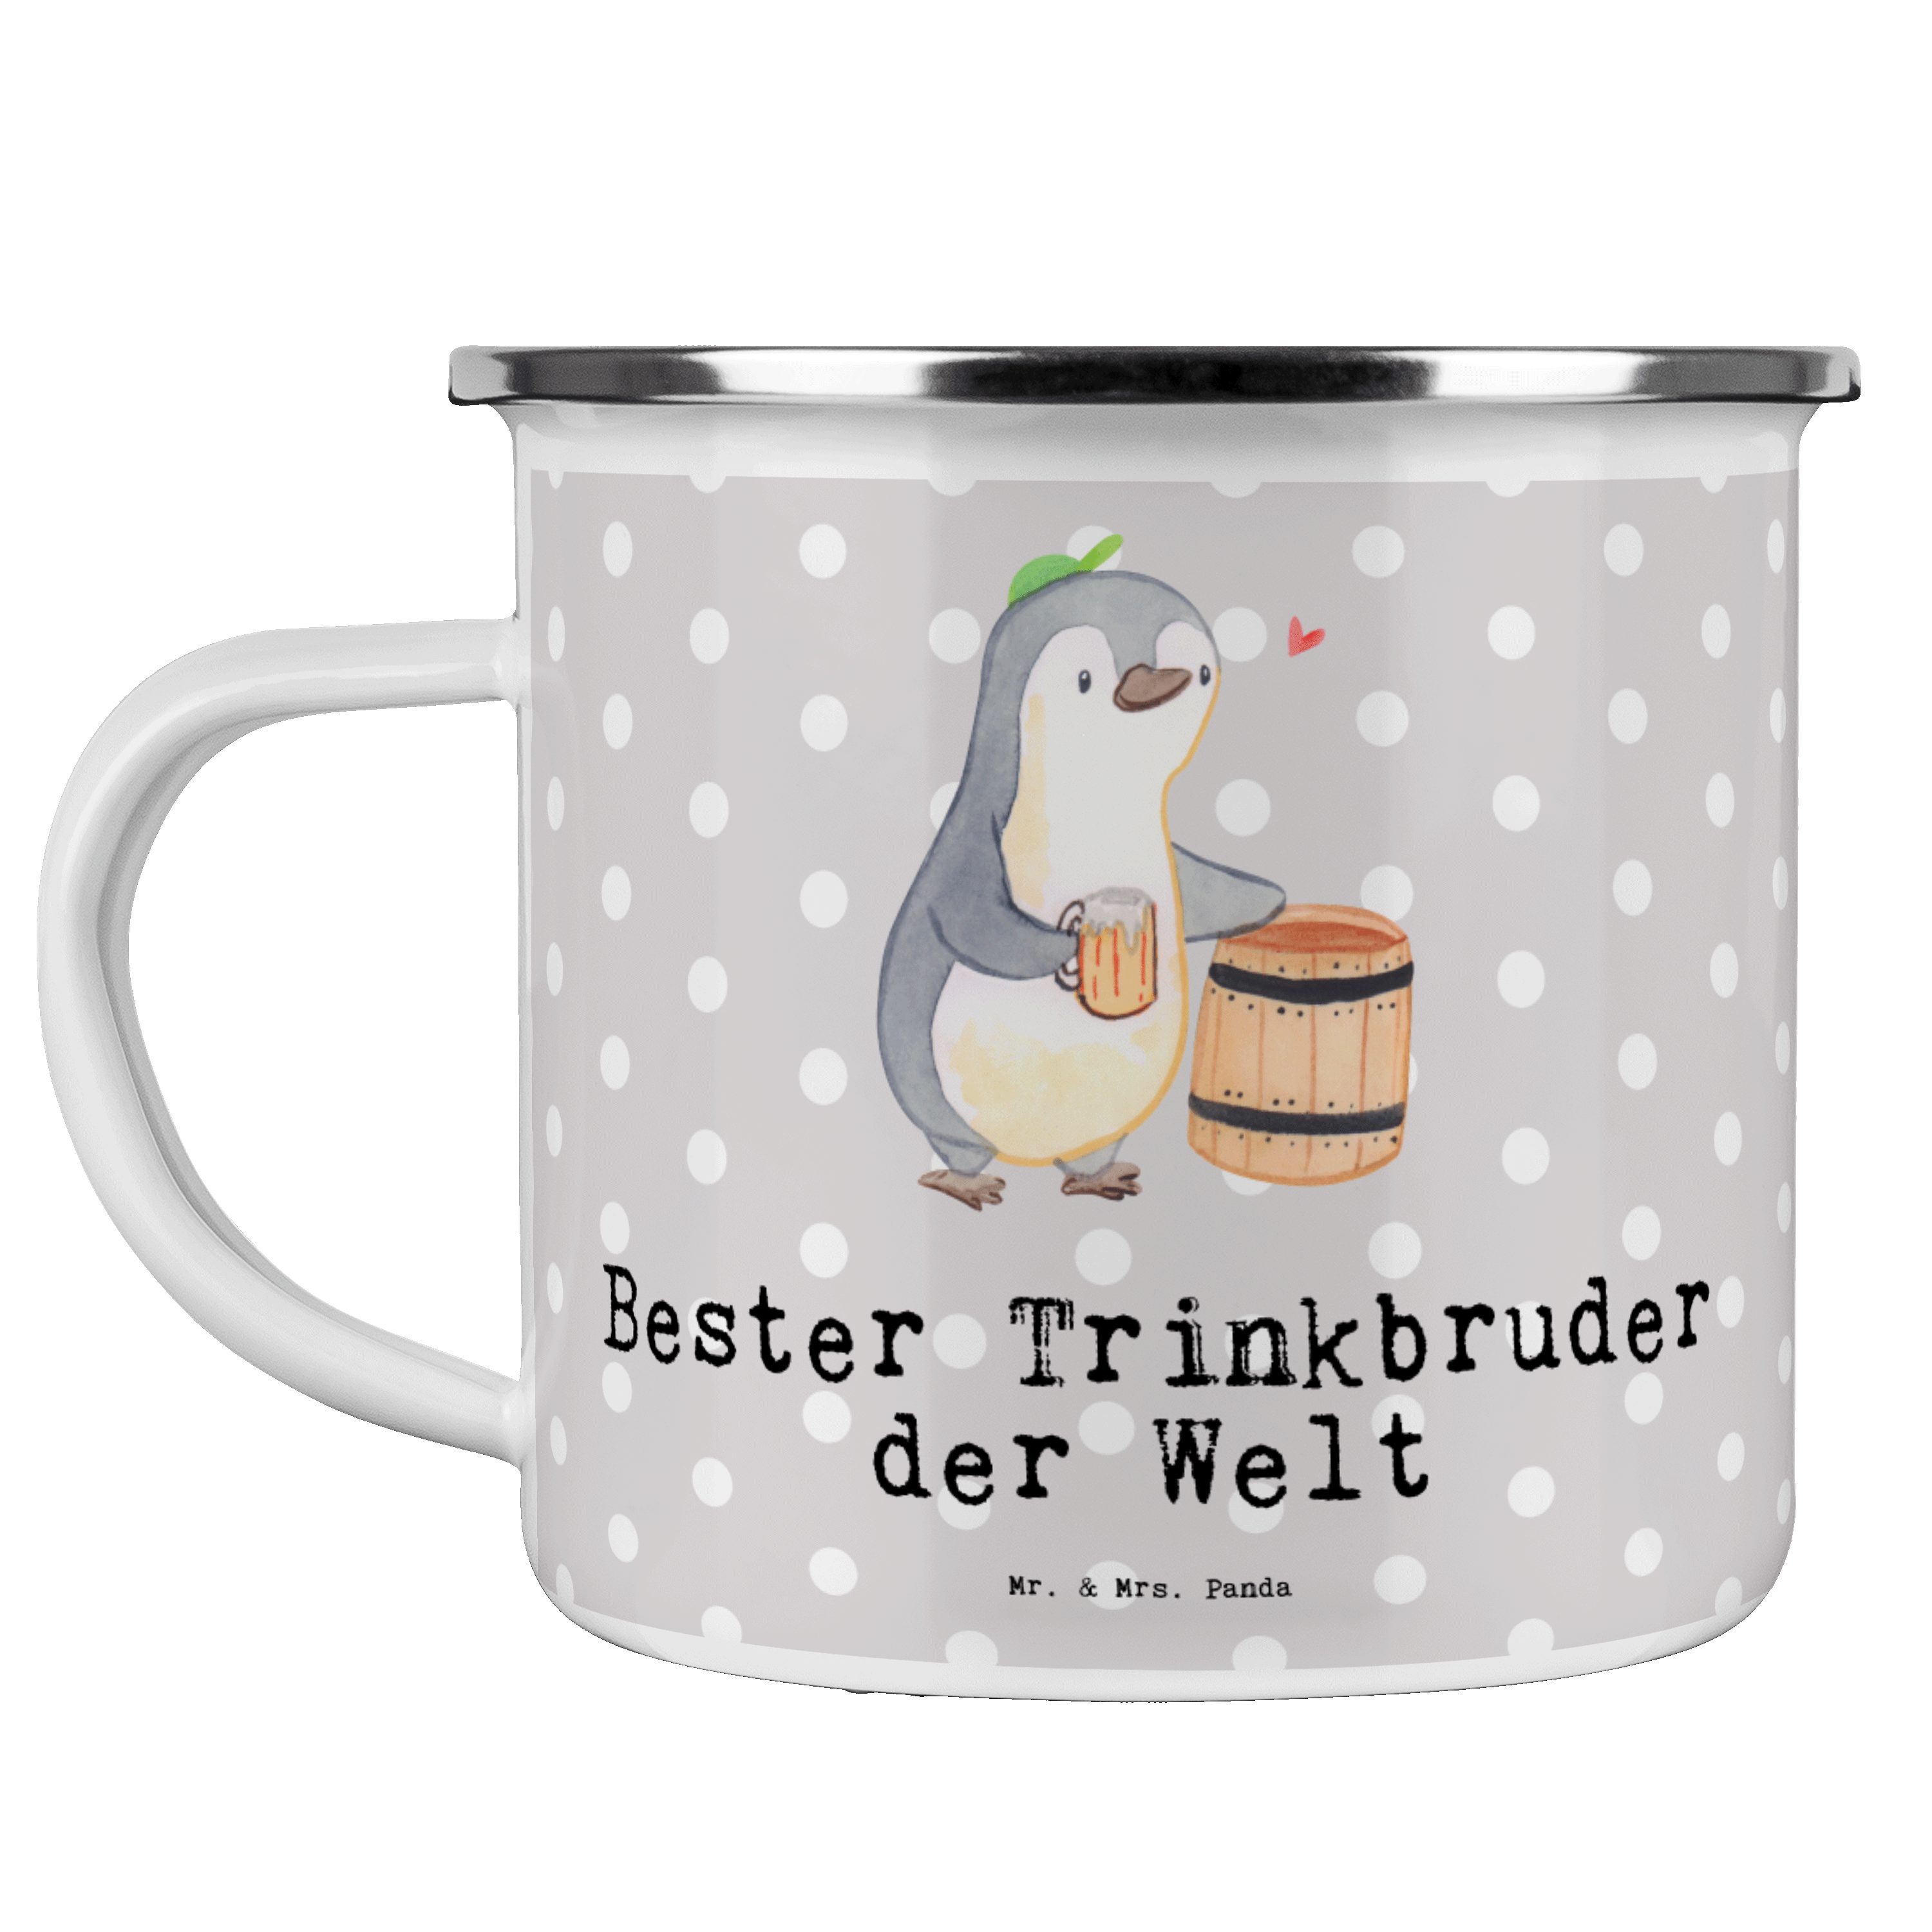 Outdoo, Geschenk, Pastell Pinguin Mr. Becher Mrs. Welt Trinkbruder der Panda Bester Grau Emaille - & -